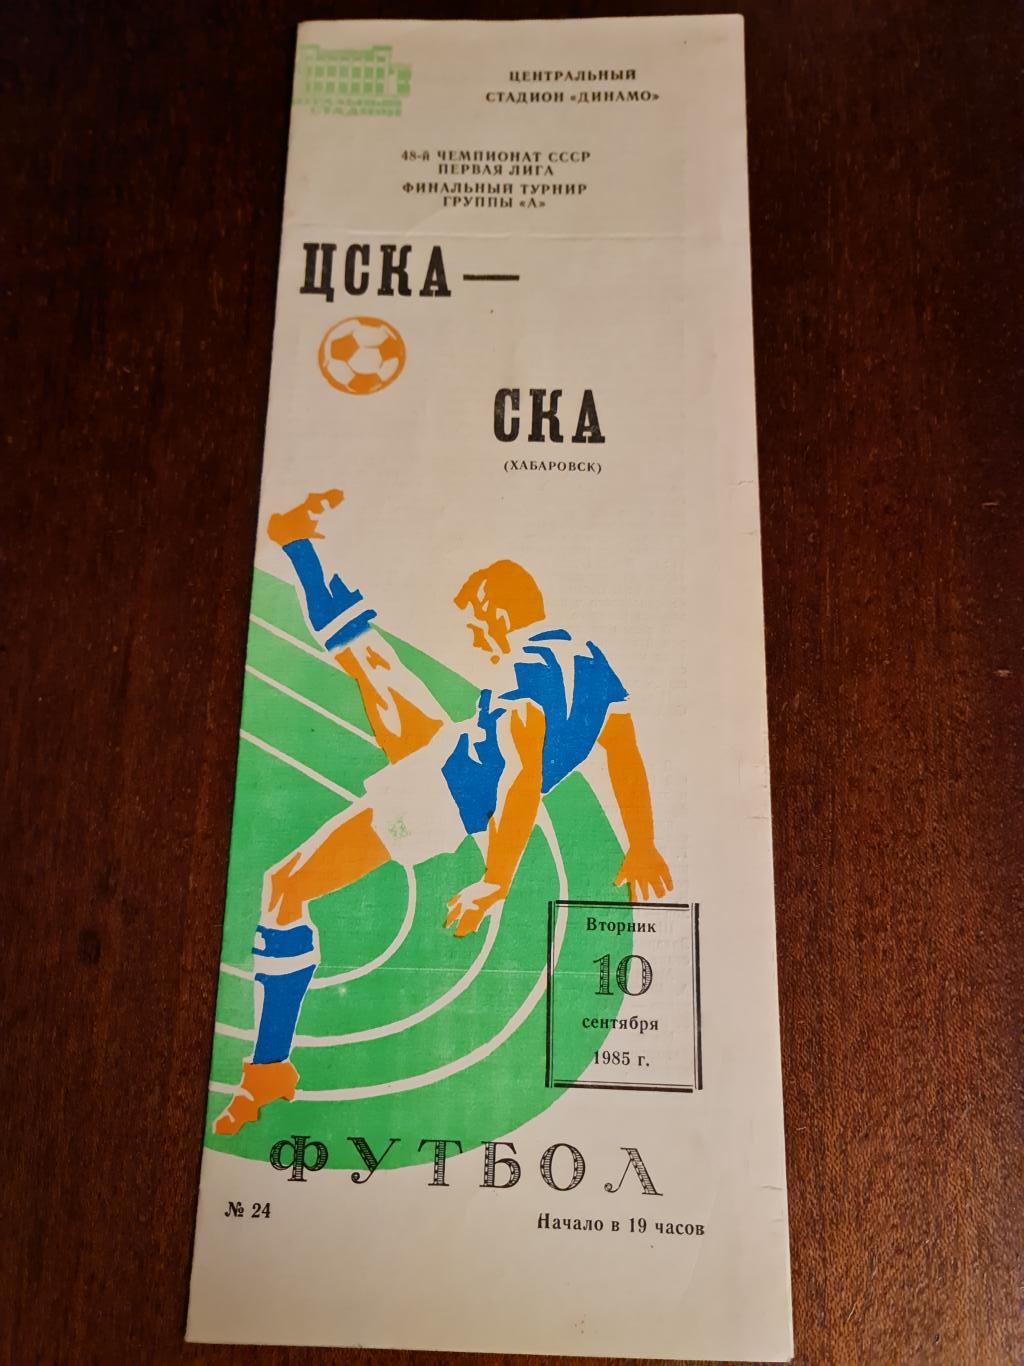 10.09.1985. ЦСКА- СКА Хабаровск.Программа+ билет.